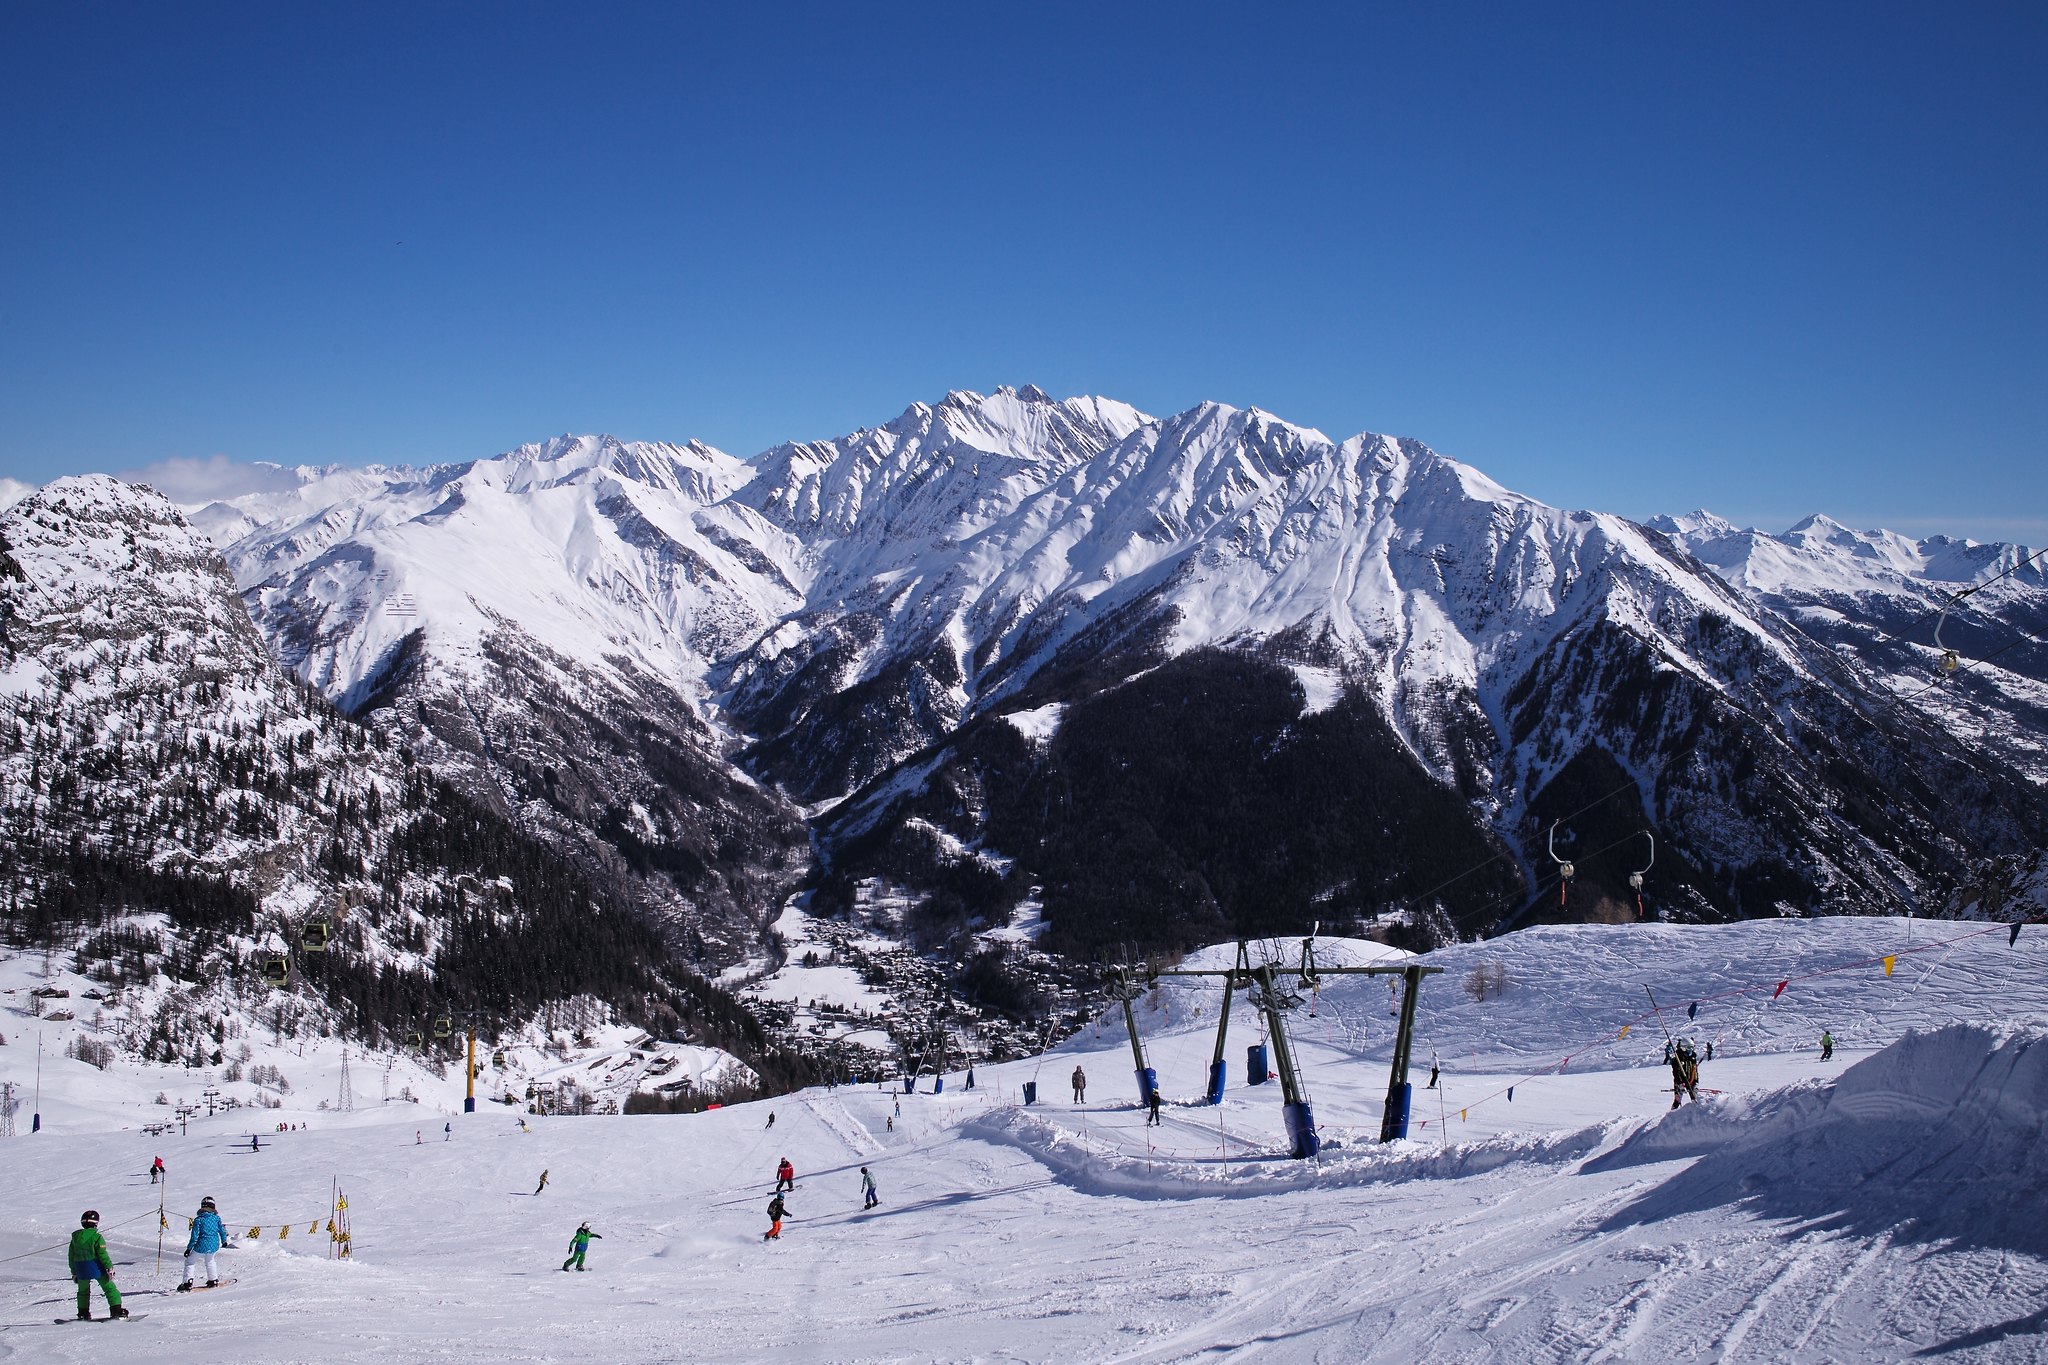 Skiing in Courmayeur, Italy